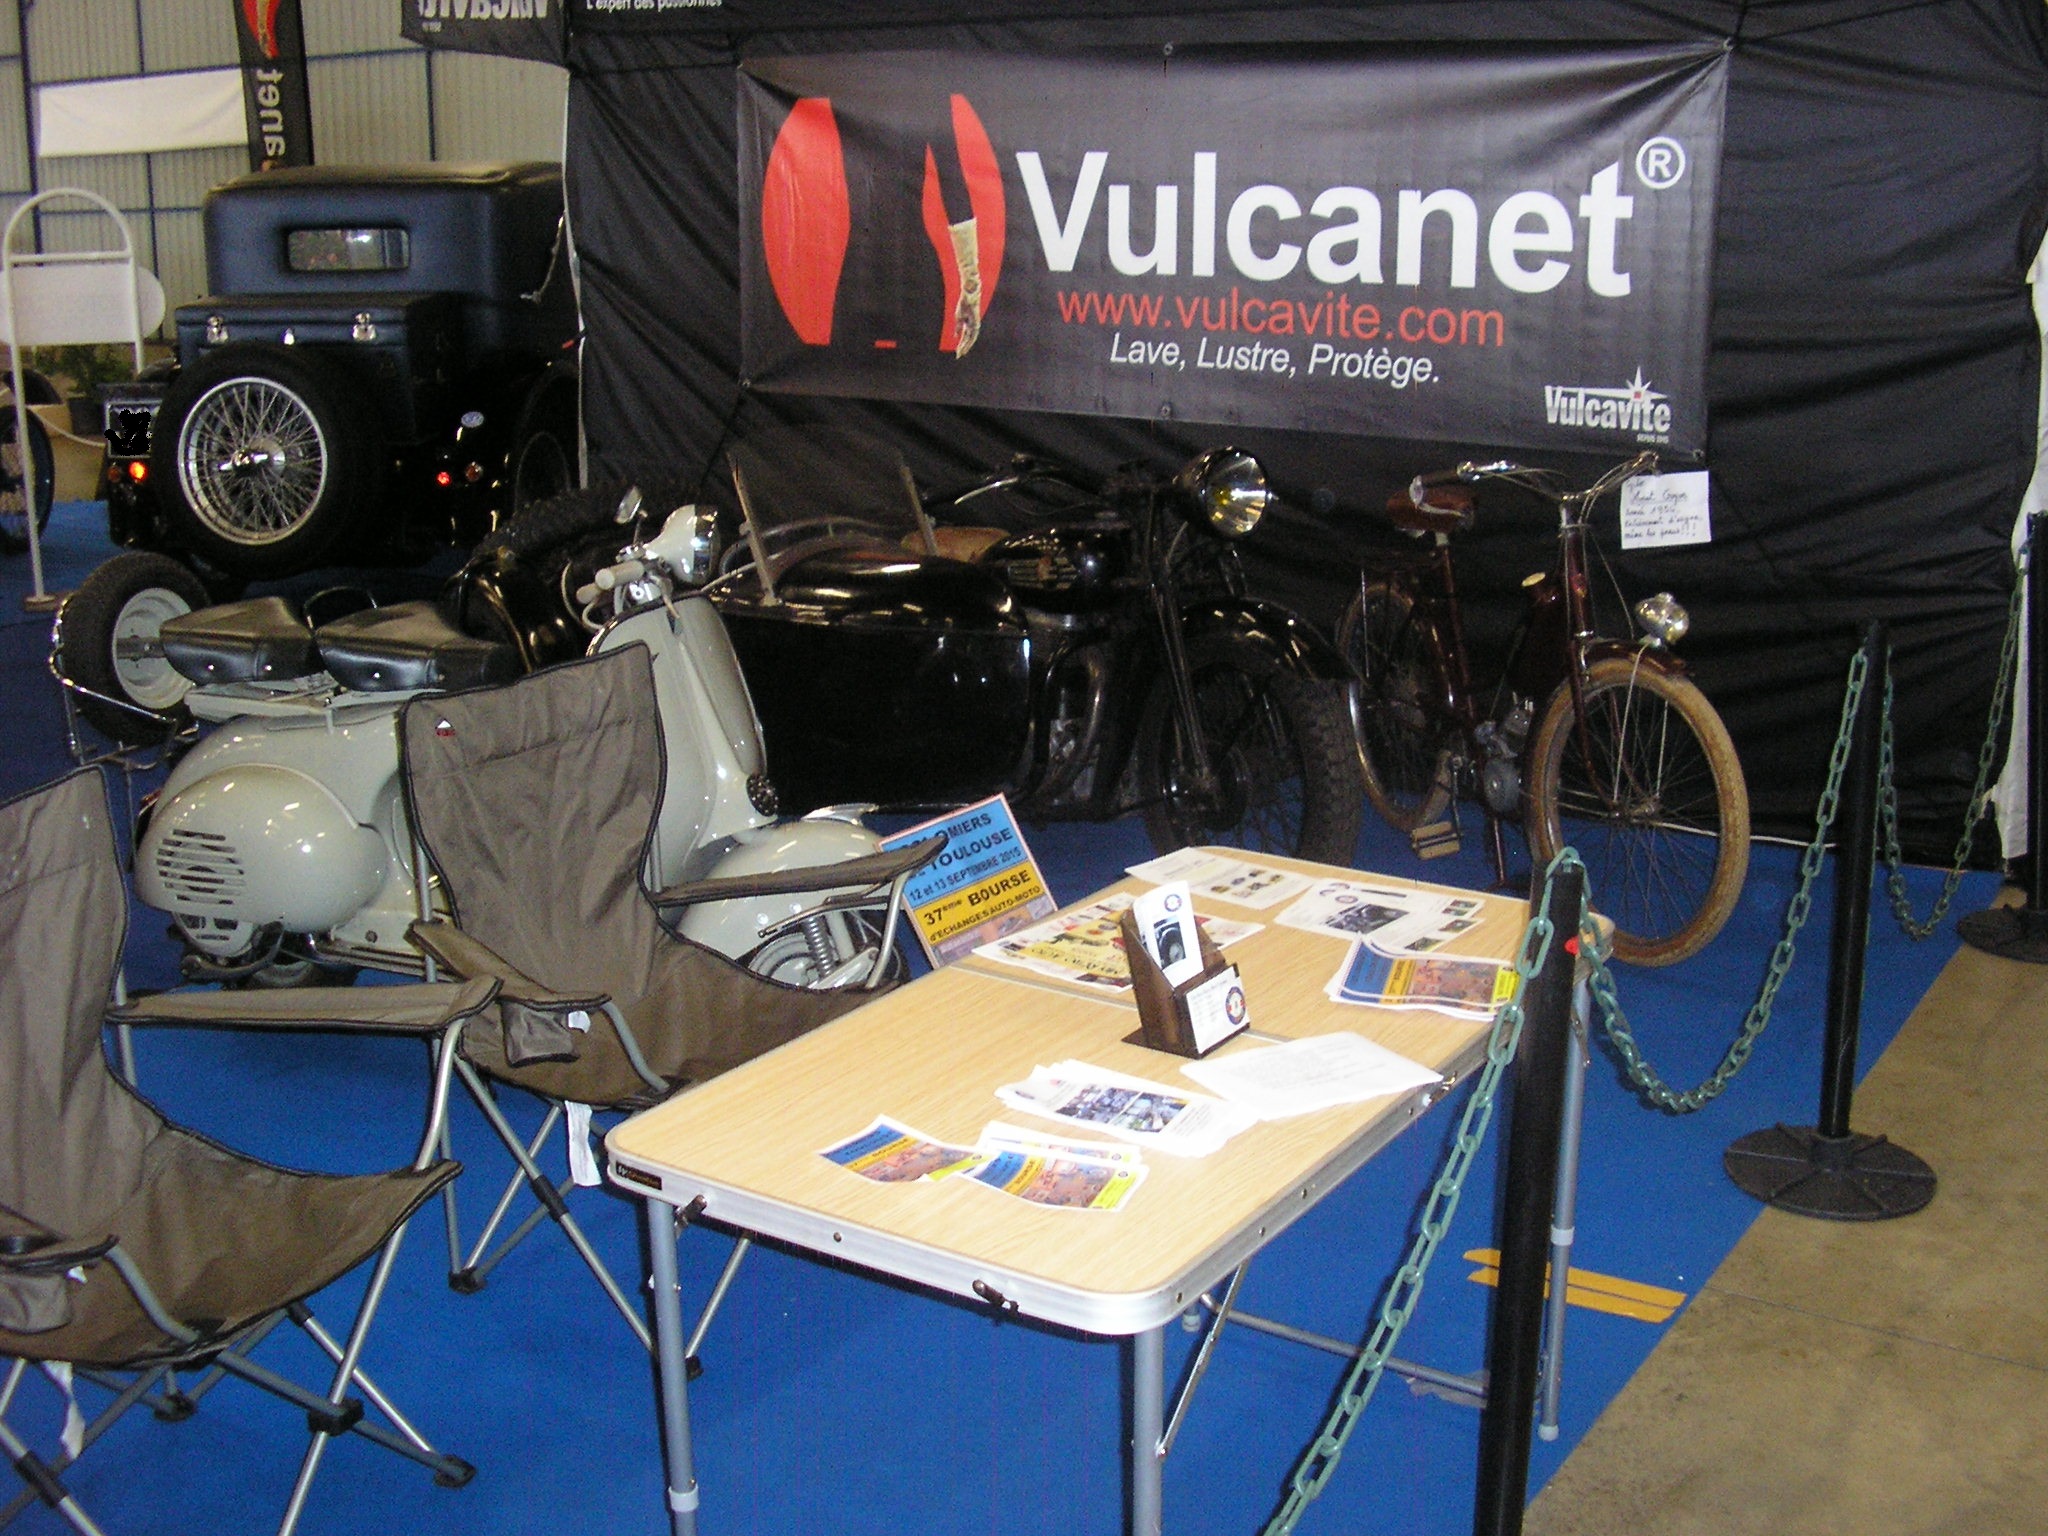 Vulcanet Toulouse